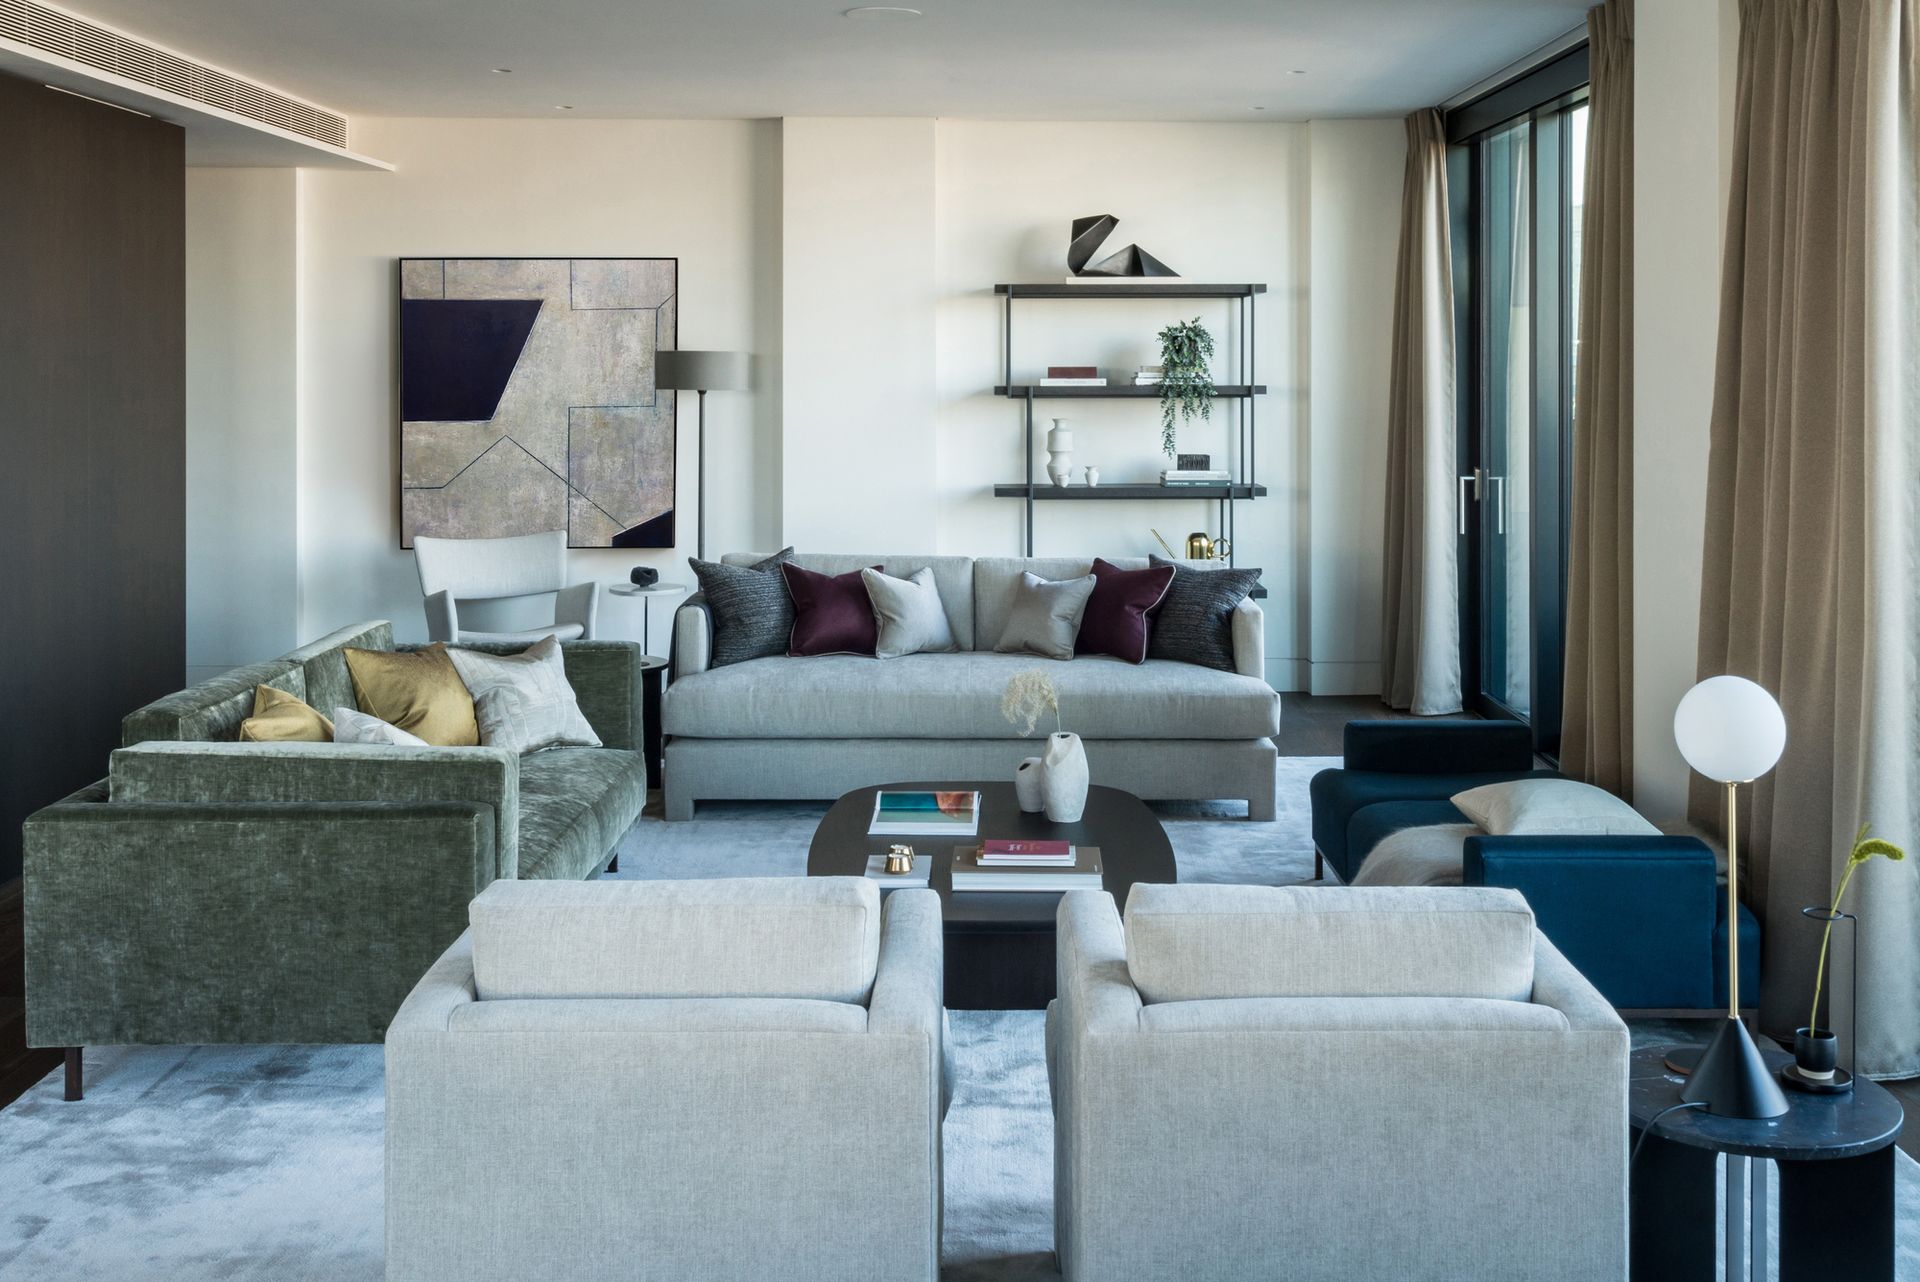 Sofa dimensions – how to choose the perfect sofa size | Livingetc